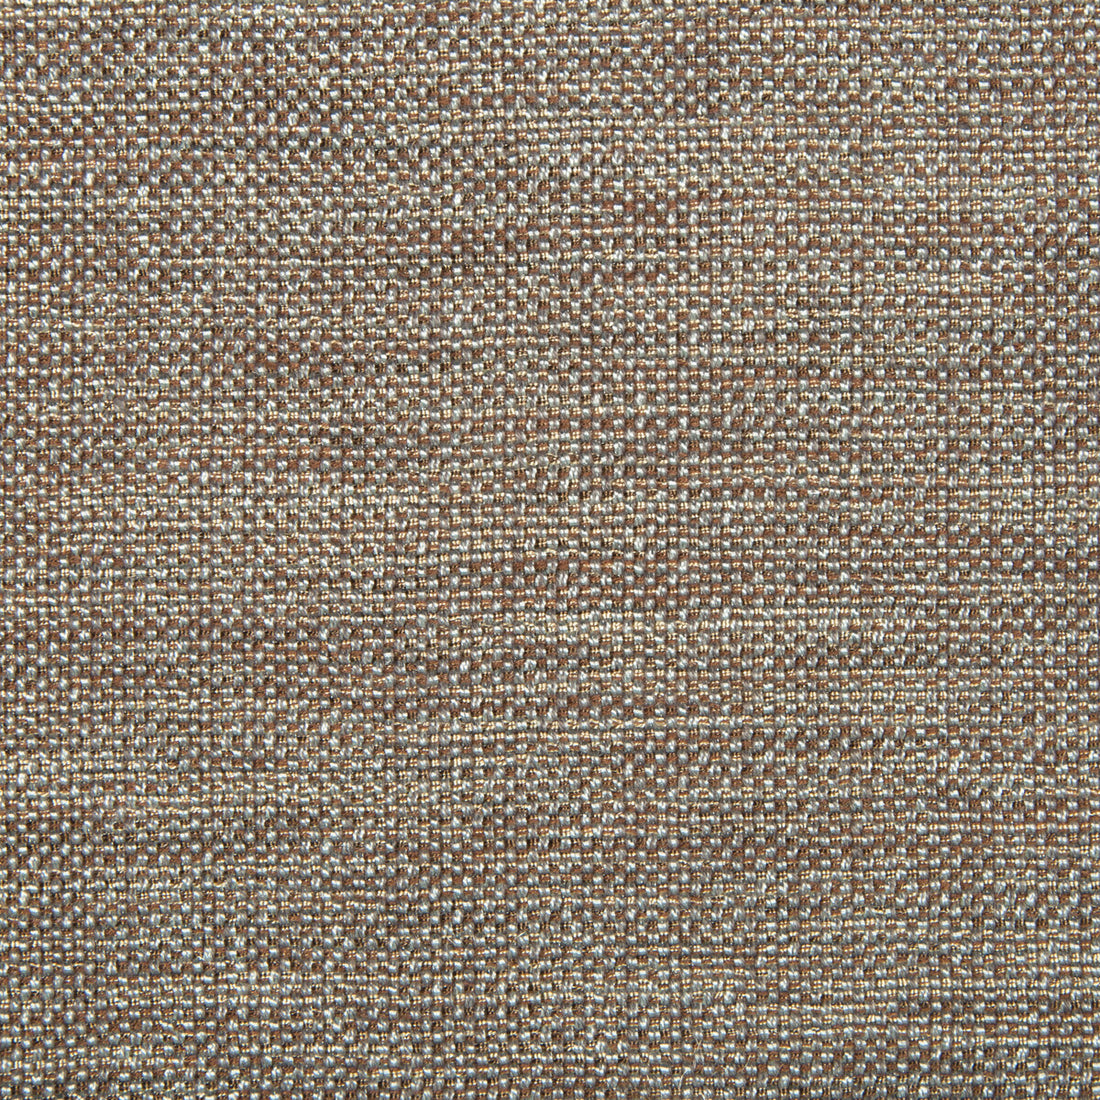 Kravet Smart fabric in 34939-611 color - pattern 34939.611.0 - by Kravet Smart